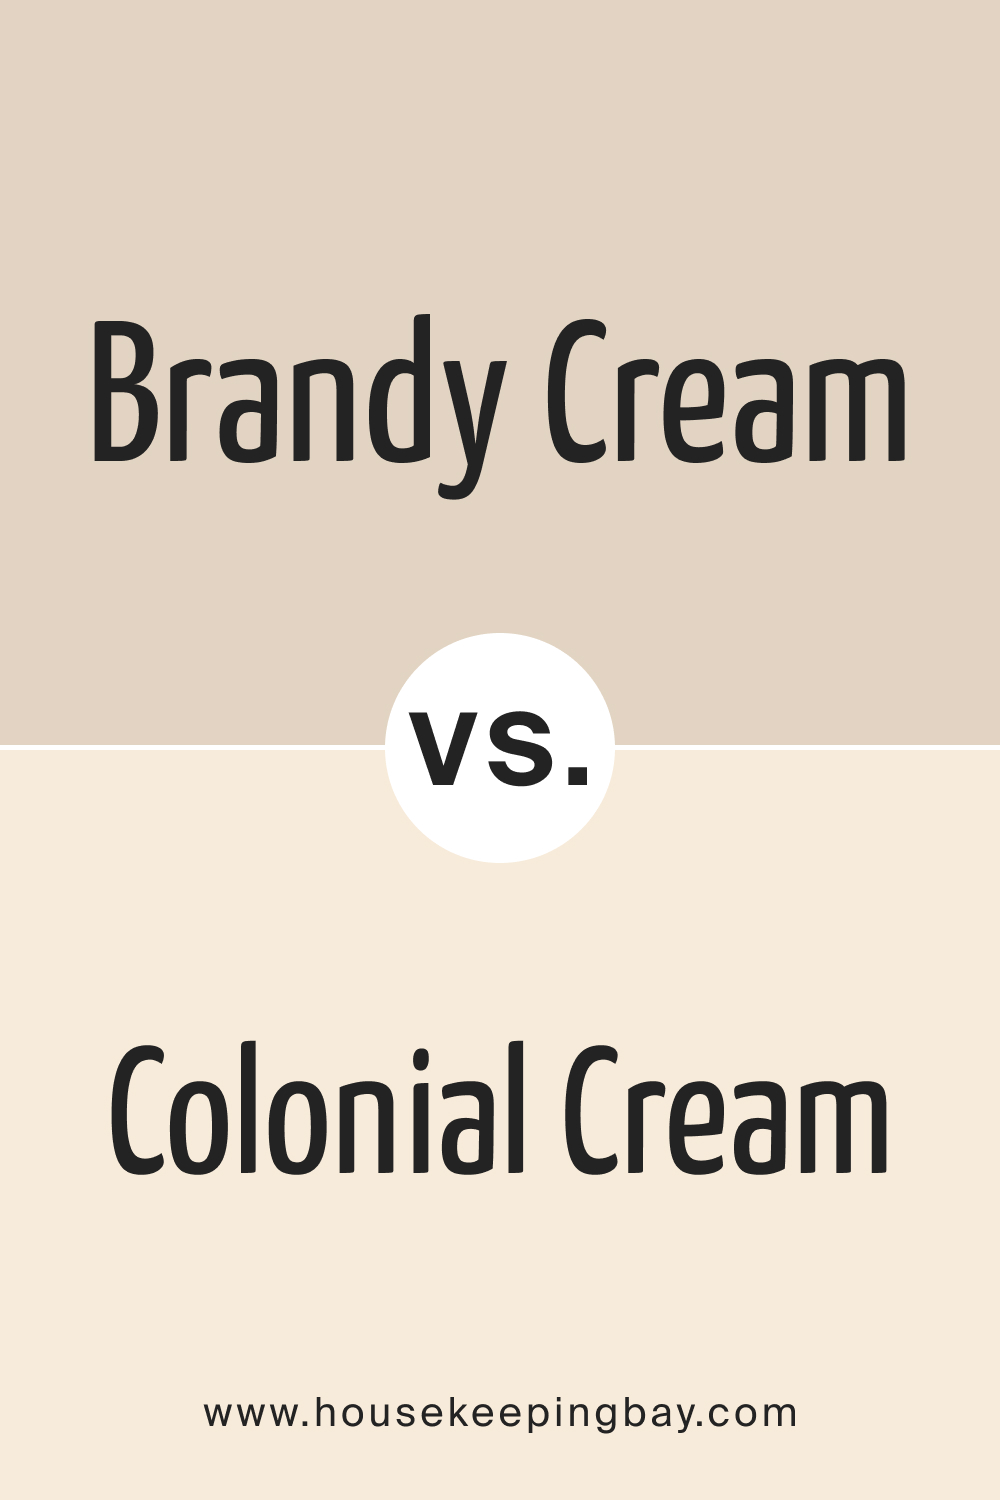 Brandy Cream OC 4 vs. OC 77 Colonial Cream